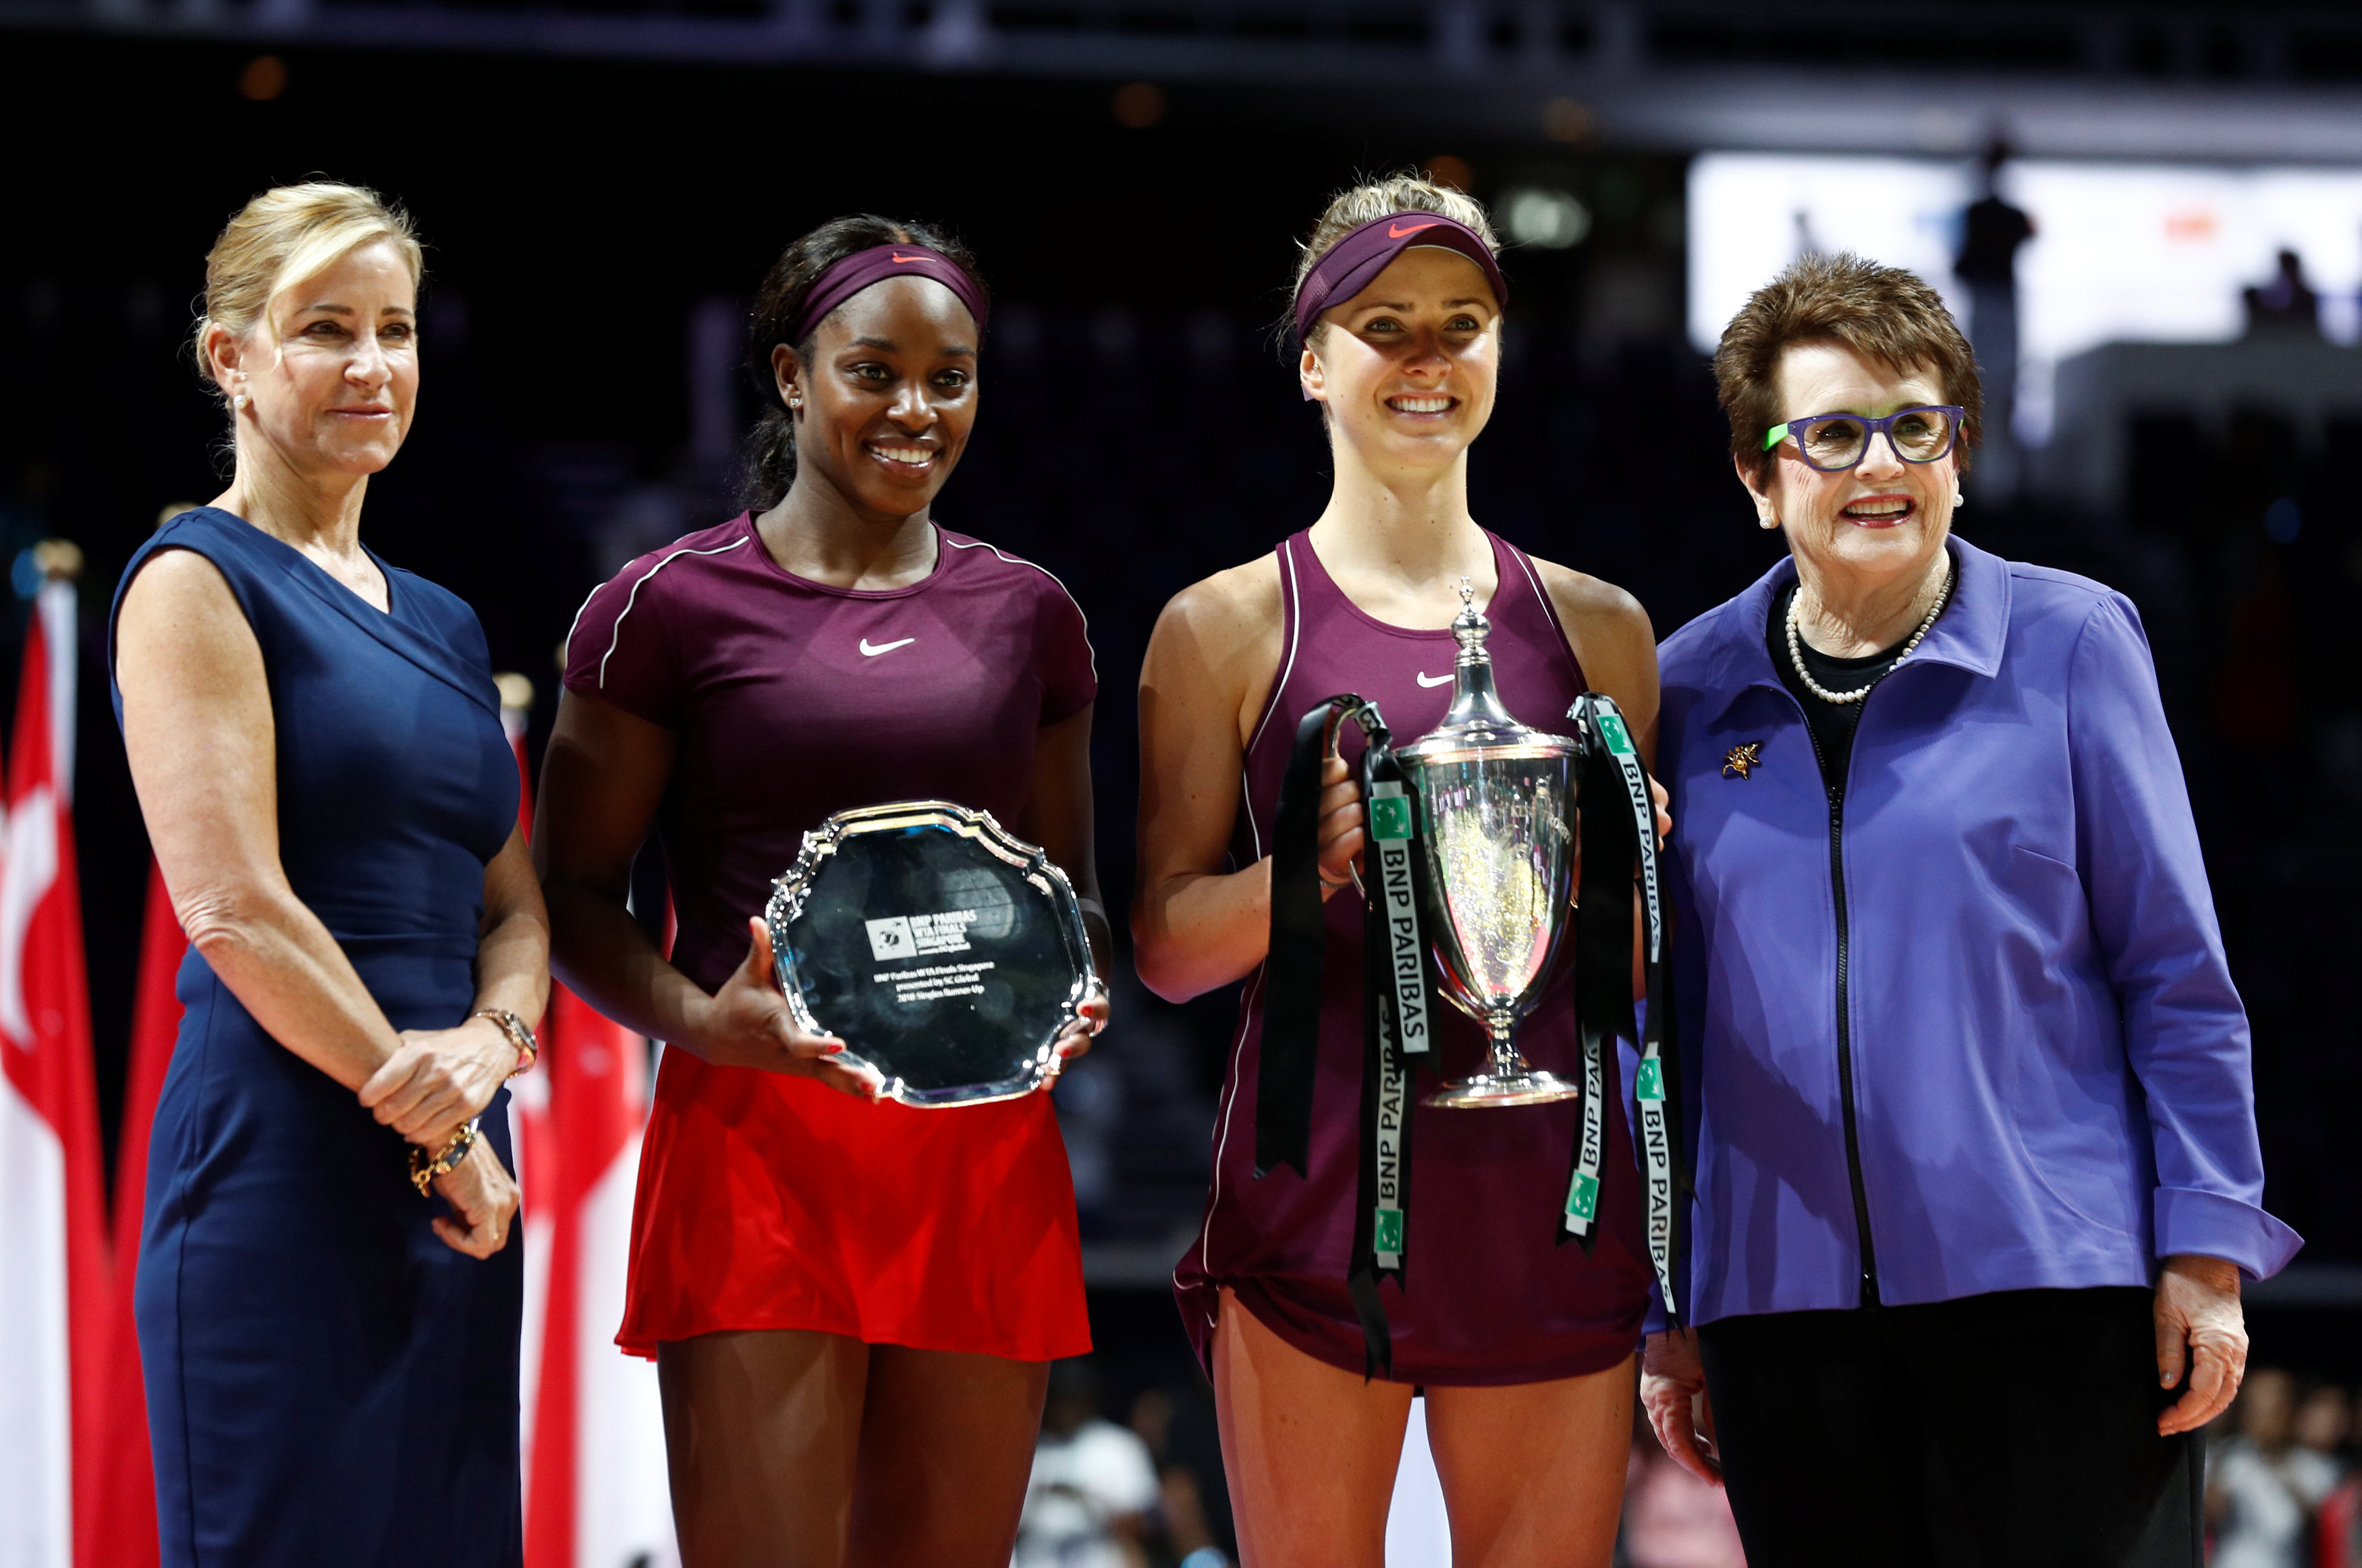 Tennis: Svitolina subdues Stephens to claim WTA Finals triumph